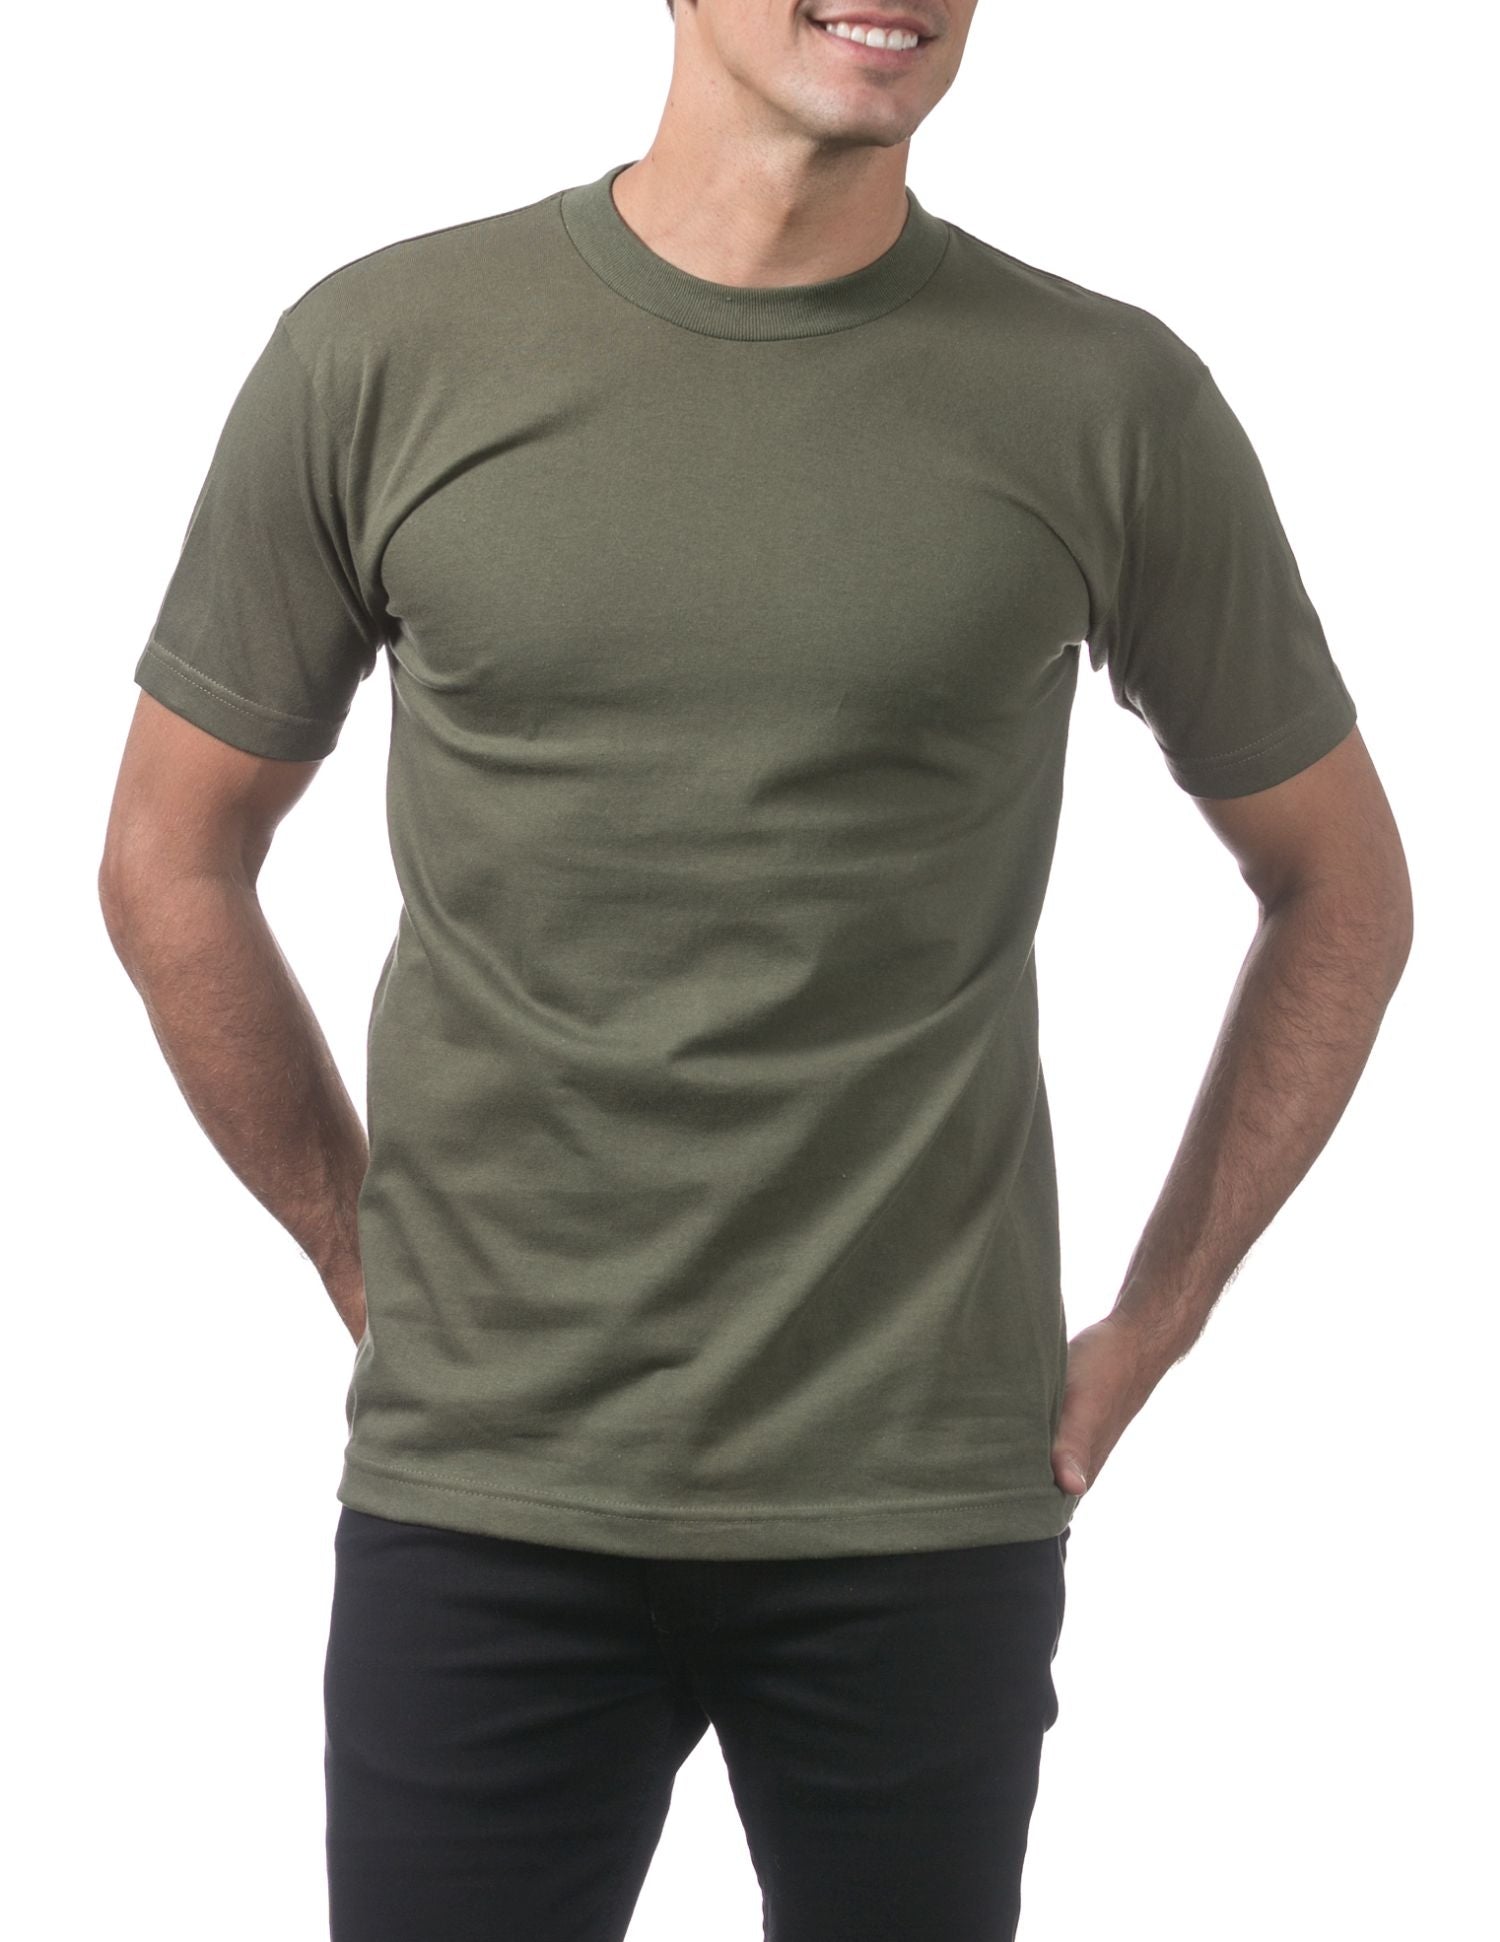 Pro Club Men's Comfort Cotton Short Sleeve T-Shirt - Olive Green - Medium - Pro-Distributing